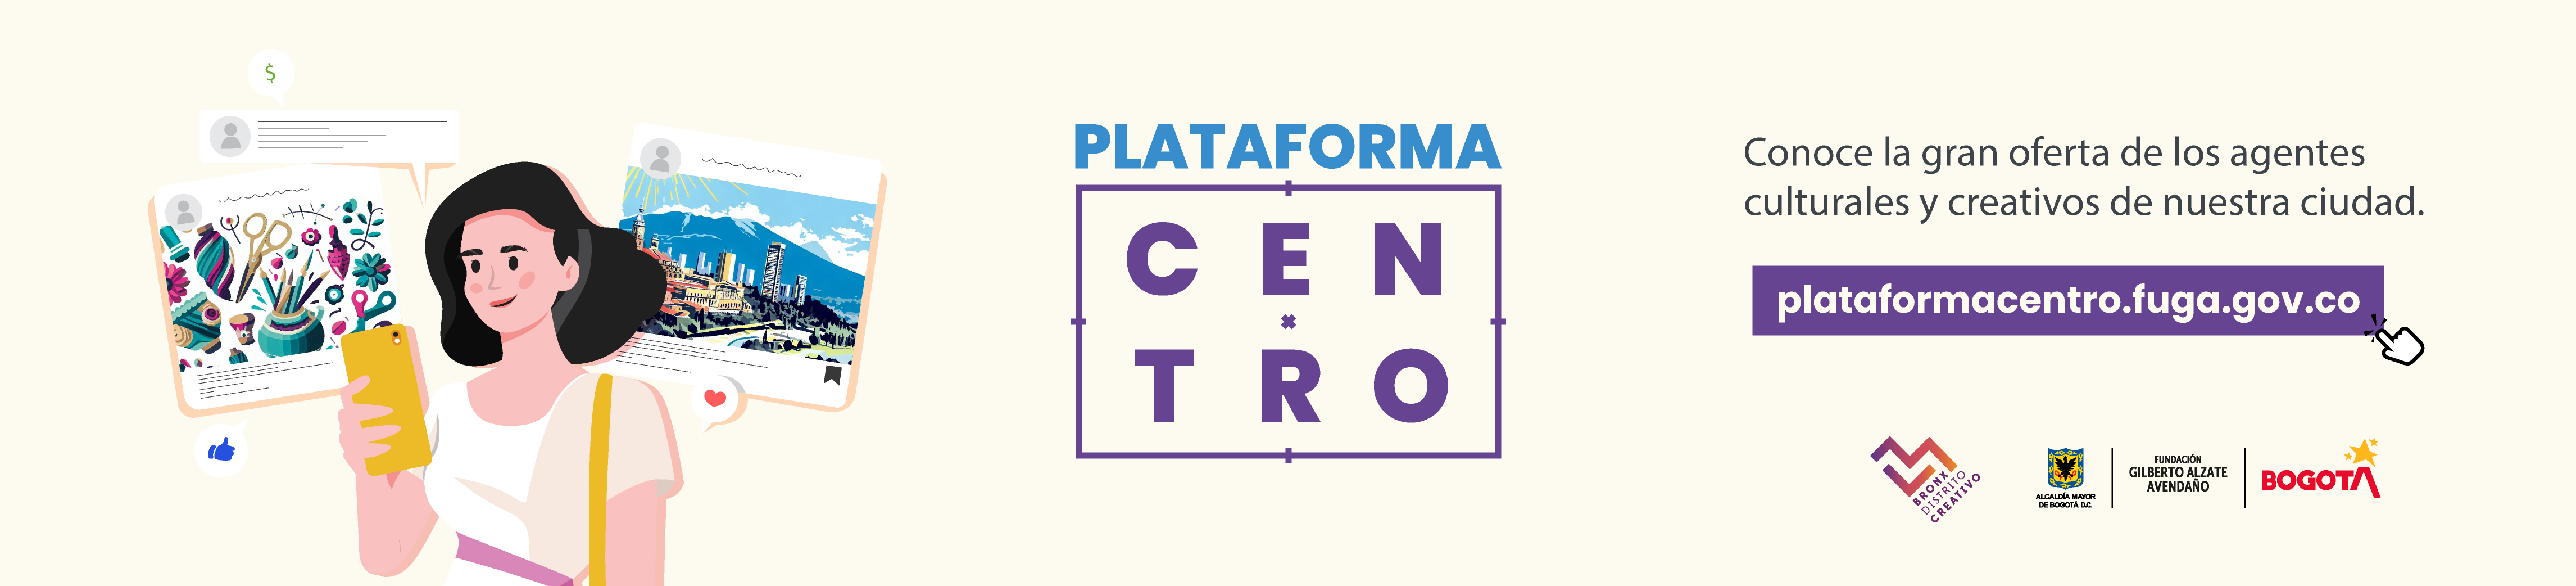 https://plataformacentro.fuga.gov.co/